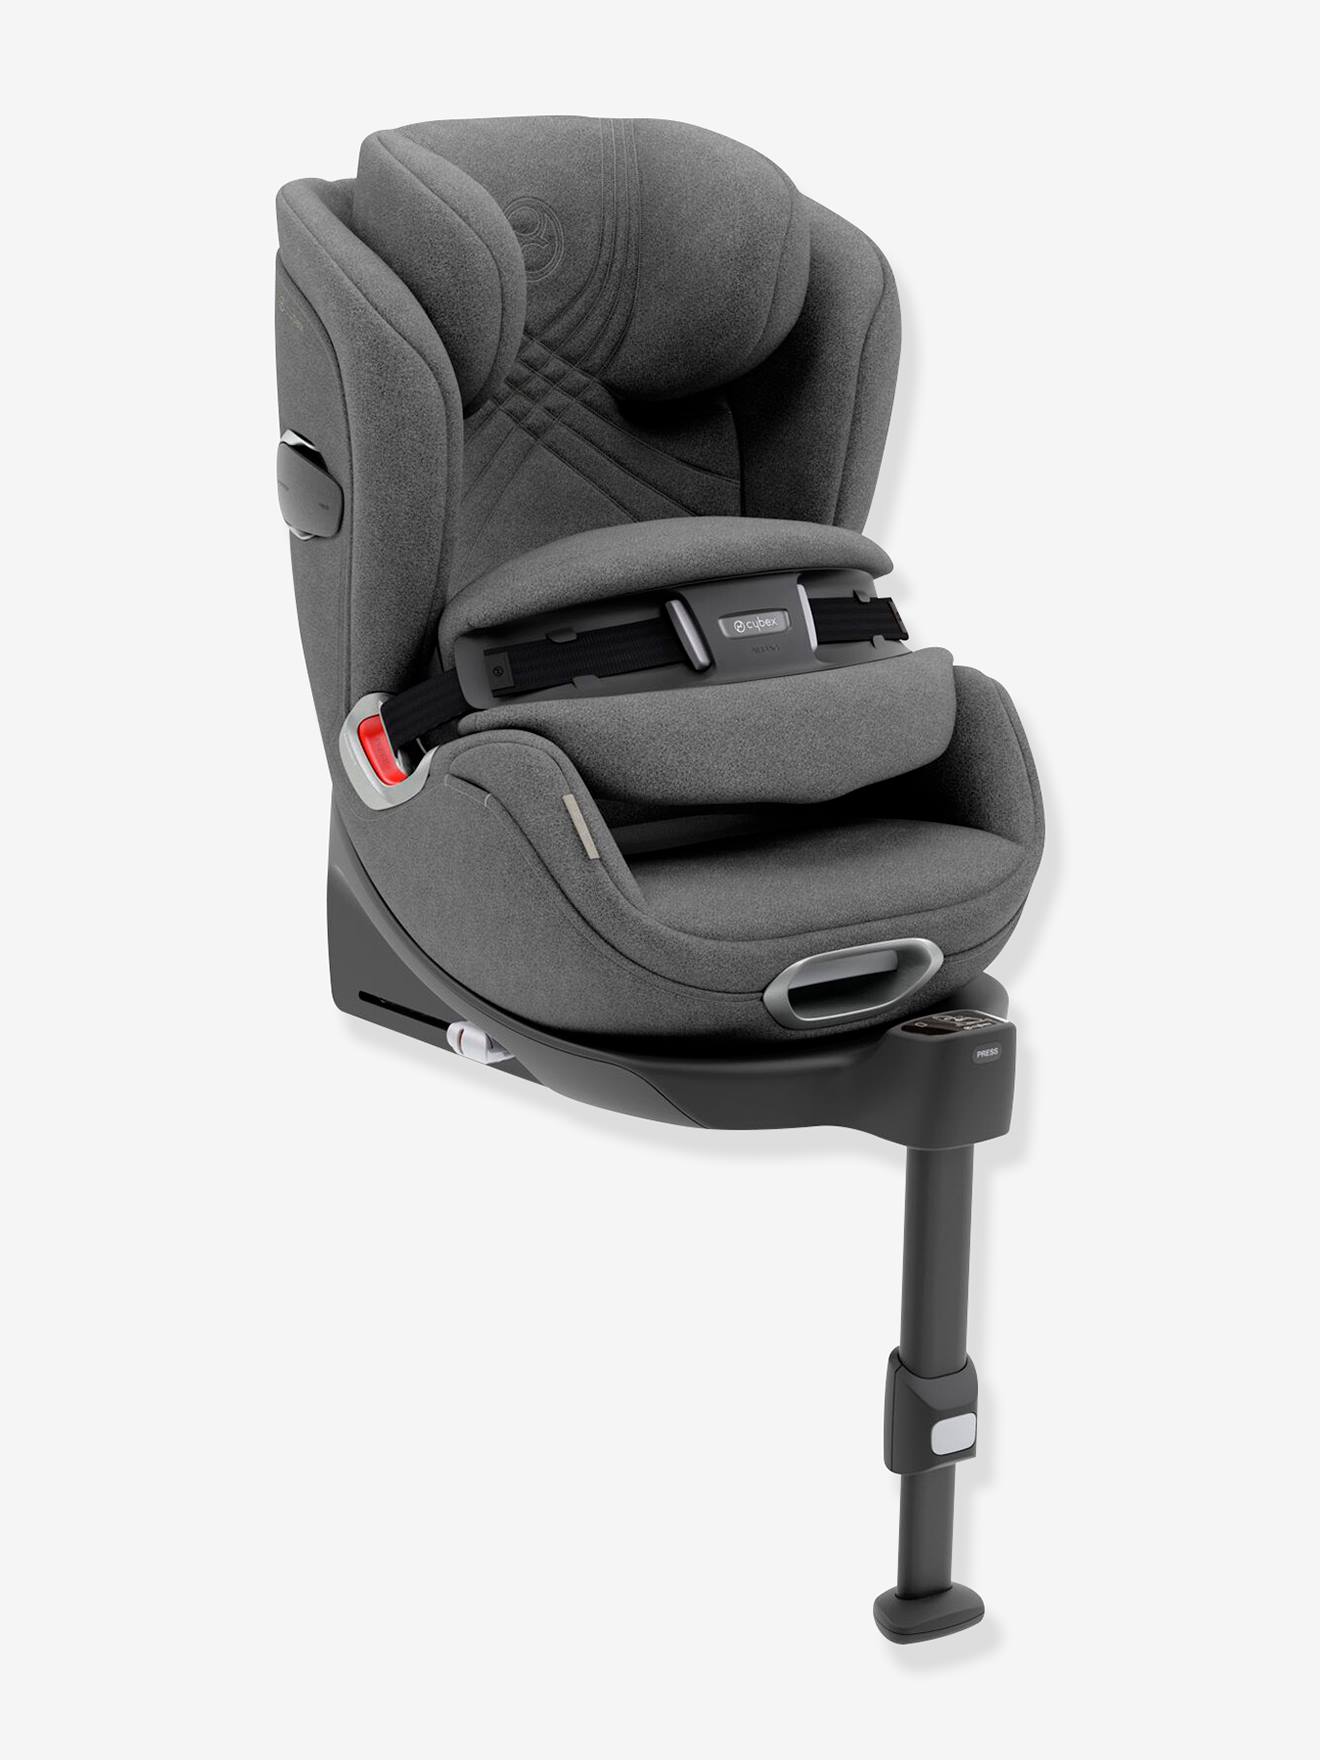 Autostoel CYBEX Platinum Anoris T i-Size, 75 à 115 cm, gelijjk aan groep - donkergrijs (soho grey), Verzorging